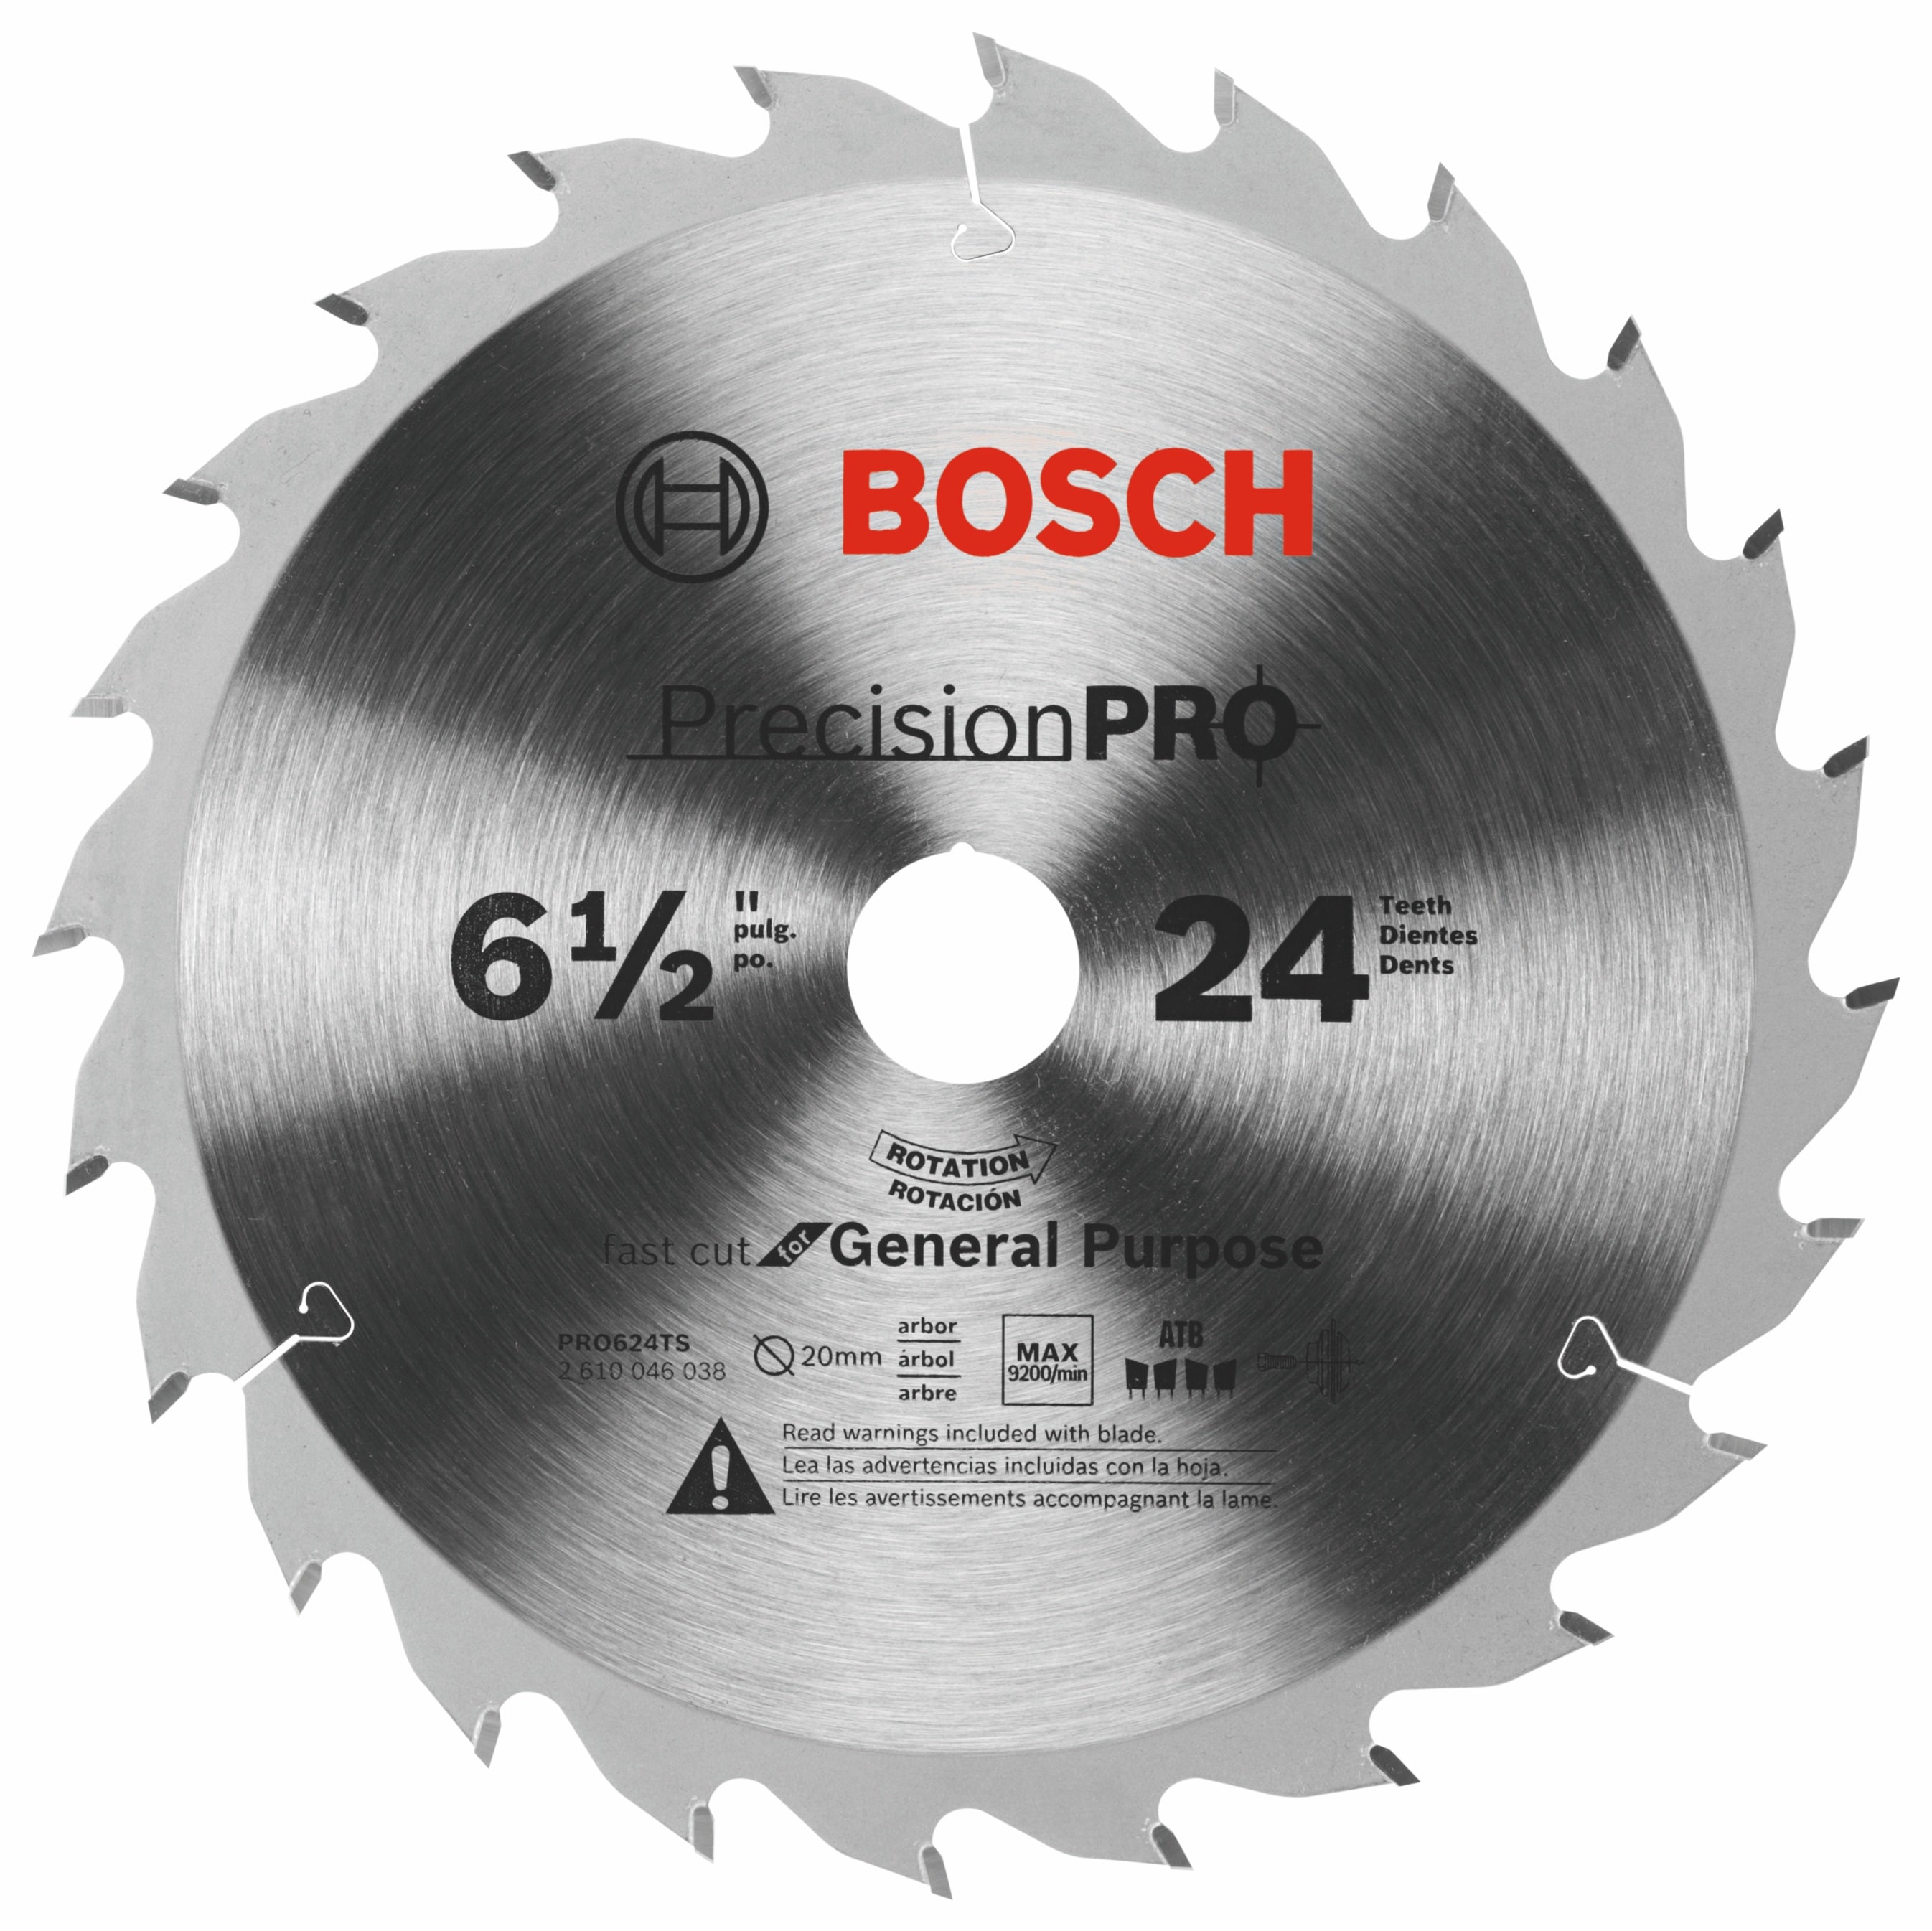 Bosch Circular Saw Blades at Lowes.com